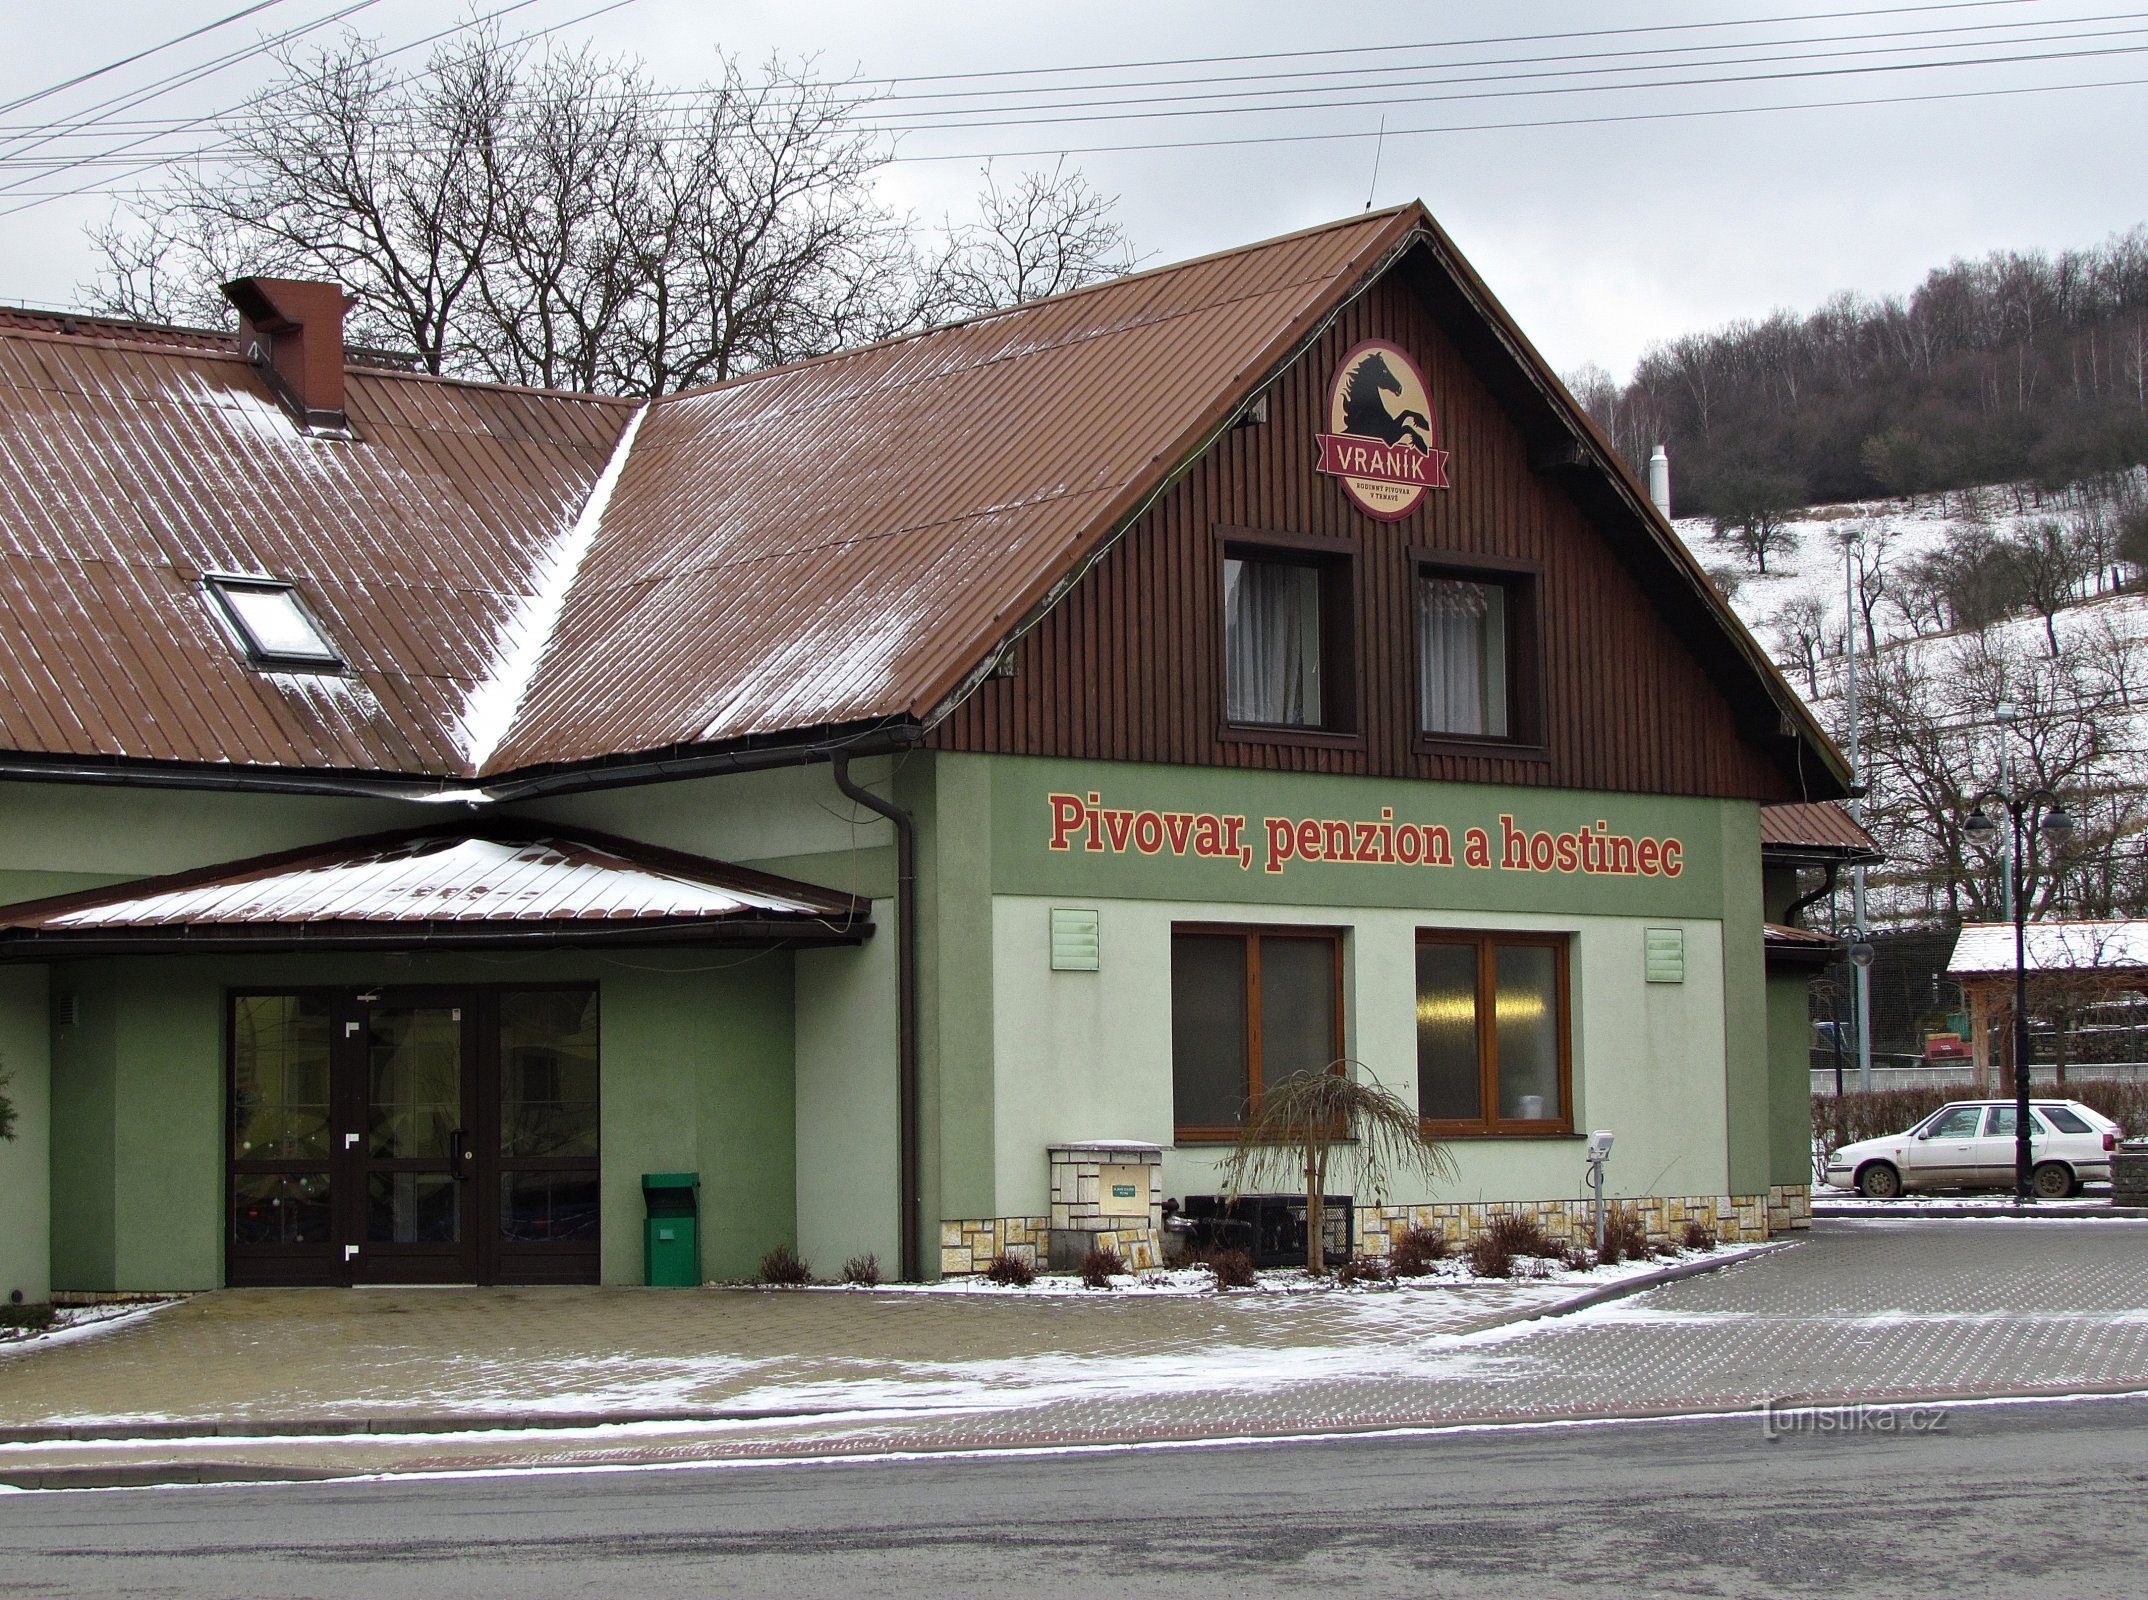 Trnava Pension, Gasthaus und Brauerei Koníček